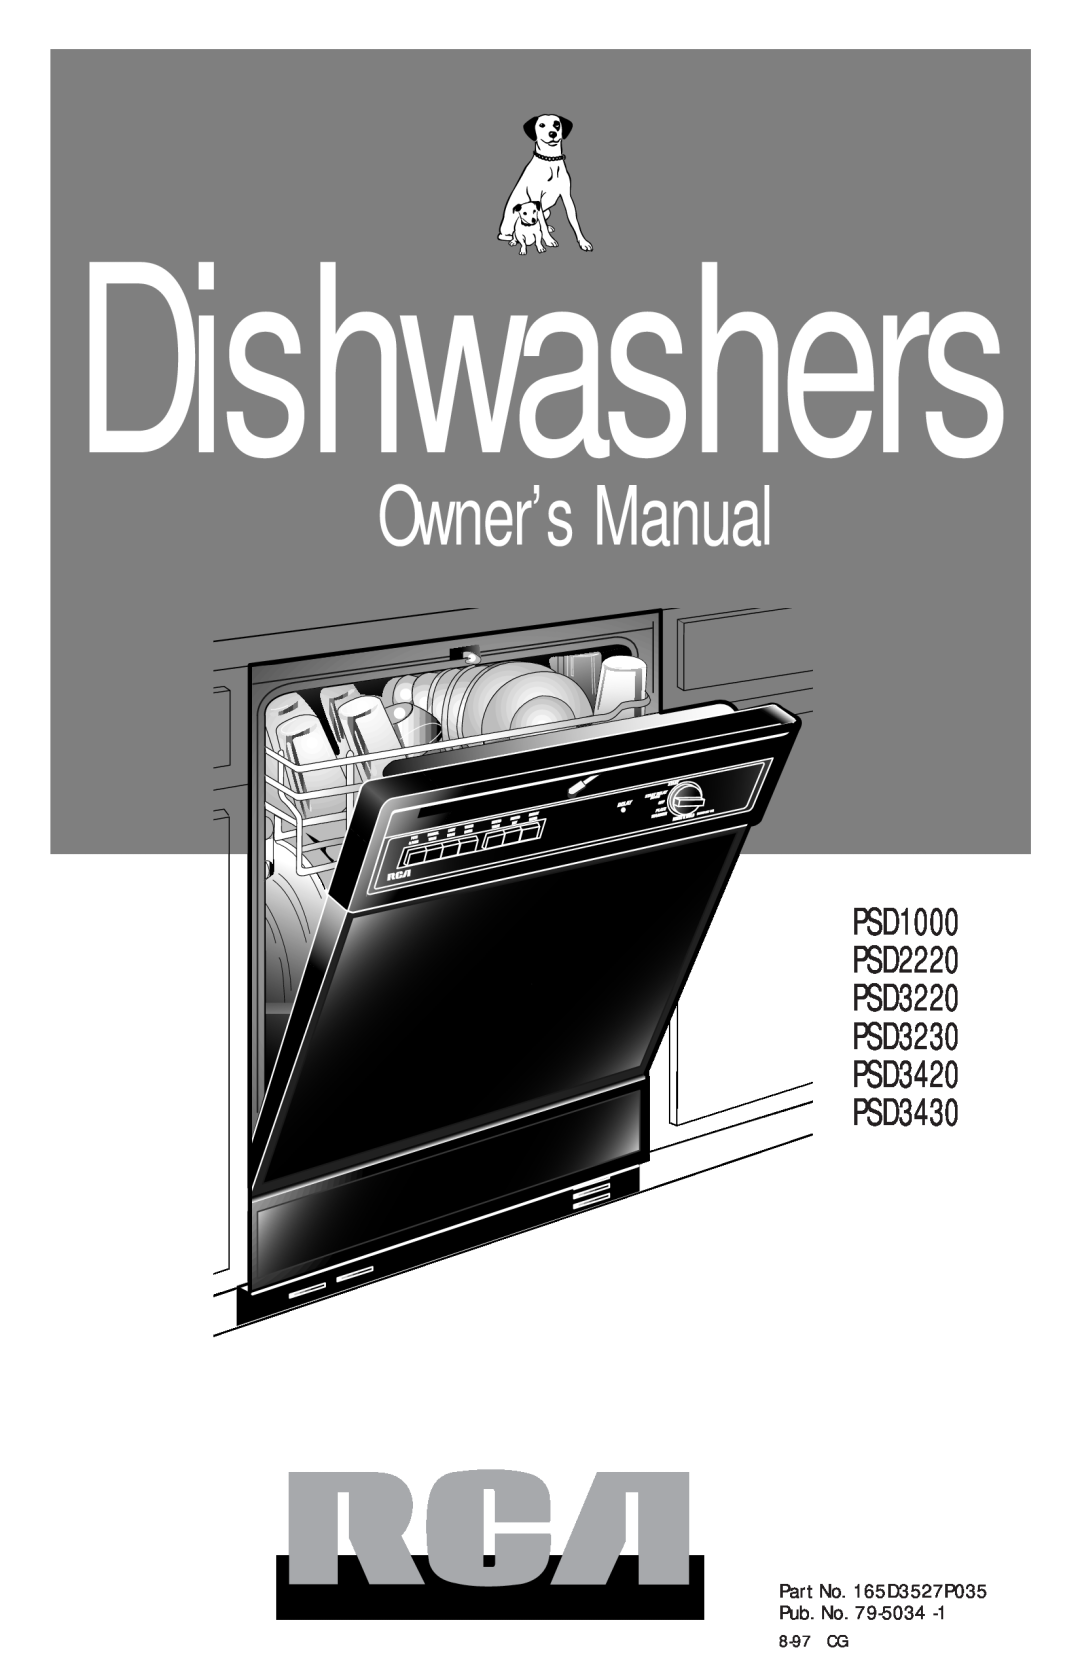 RCA owner manual Dishwashers, PSD1000 PSD2220 PSD3220 PSD3230 PSD3420 PSD3430, Part No. 165D3527P035 Pub. No, 8-97CG 